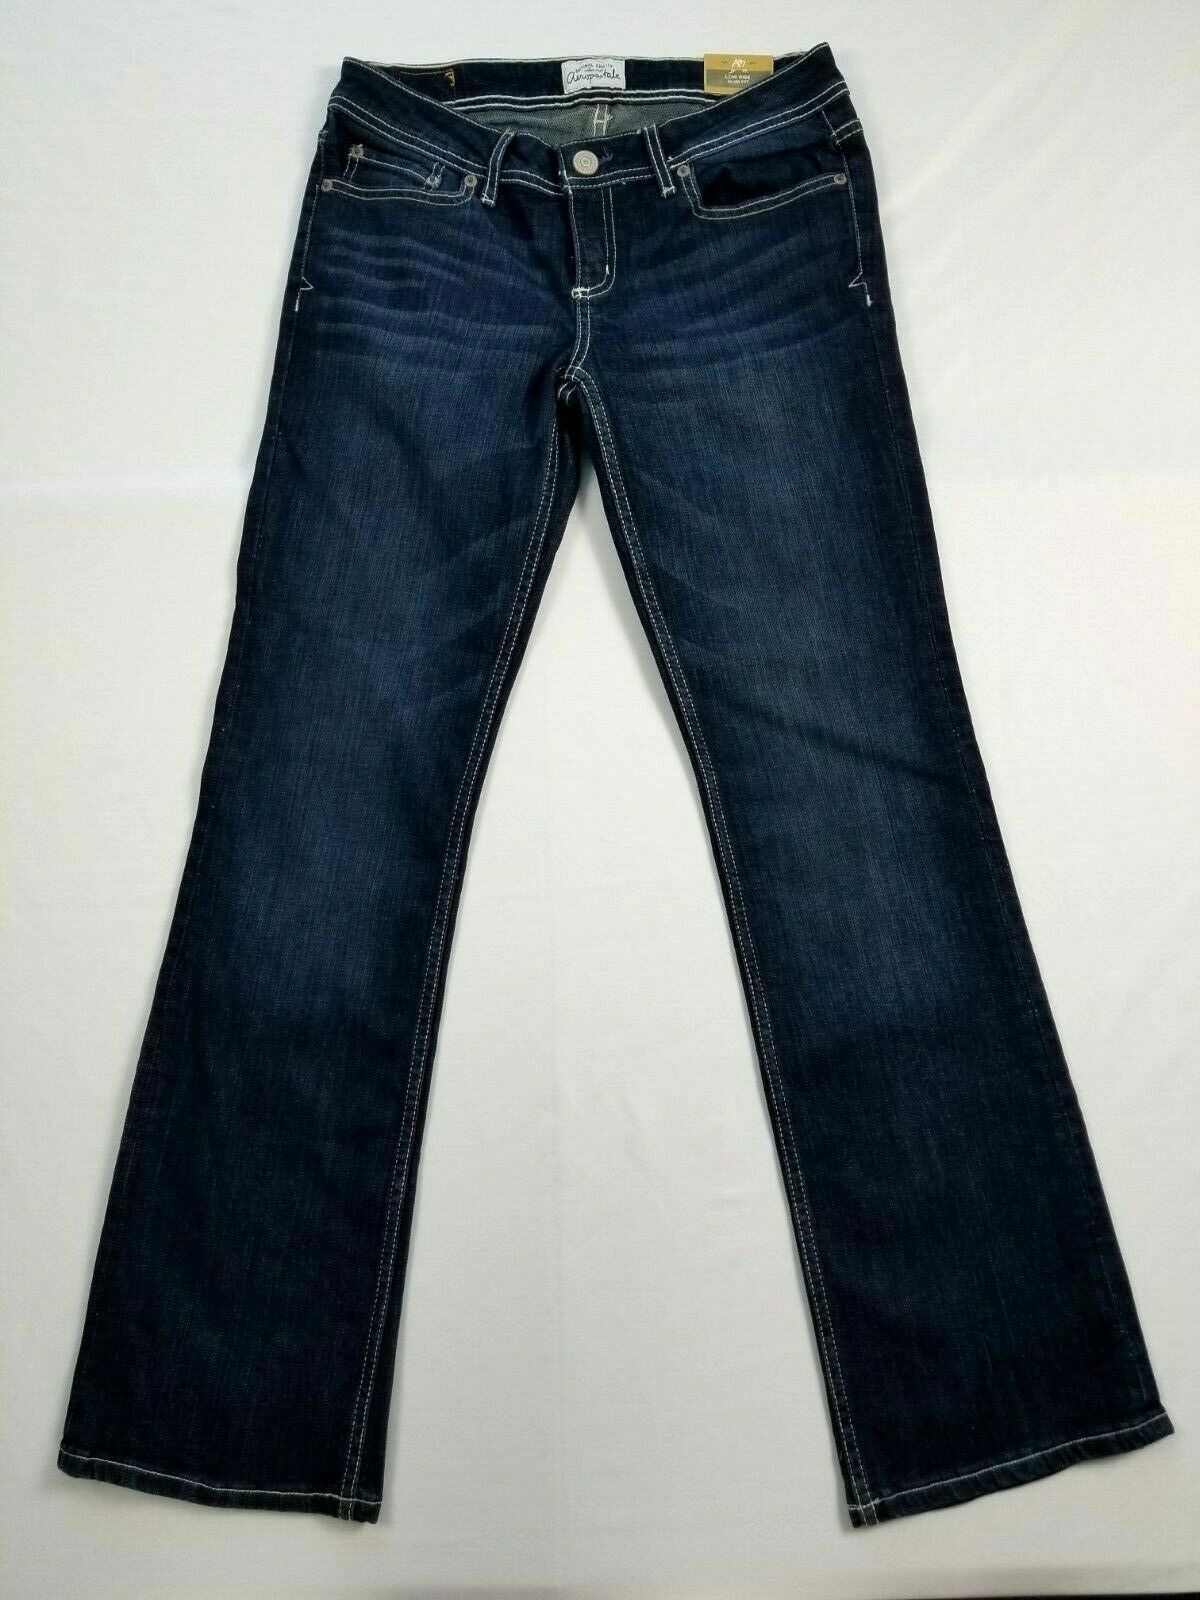 Aeropostale Women's Low Rise Slim FIt Blue Jeans Size 5/6 Chelsea ...